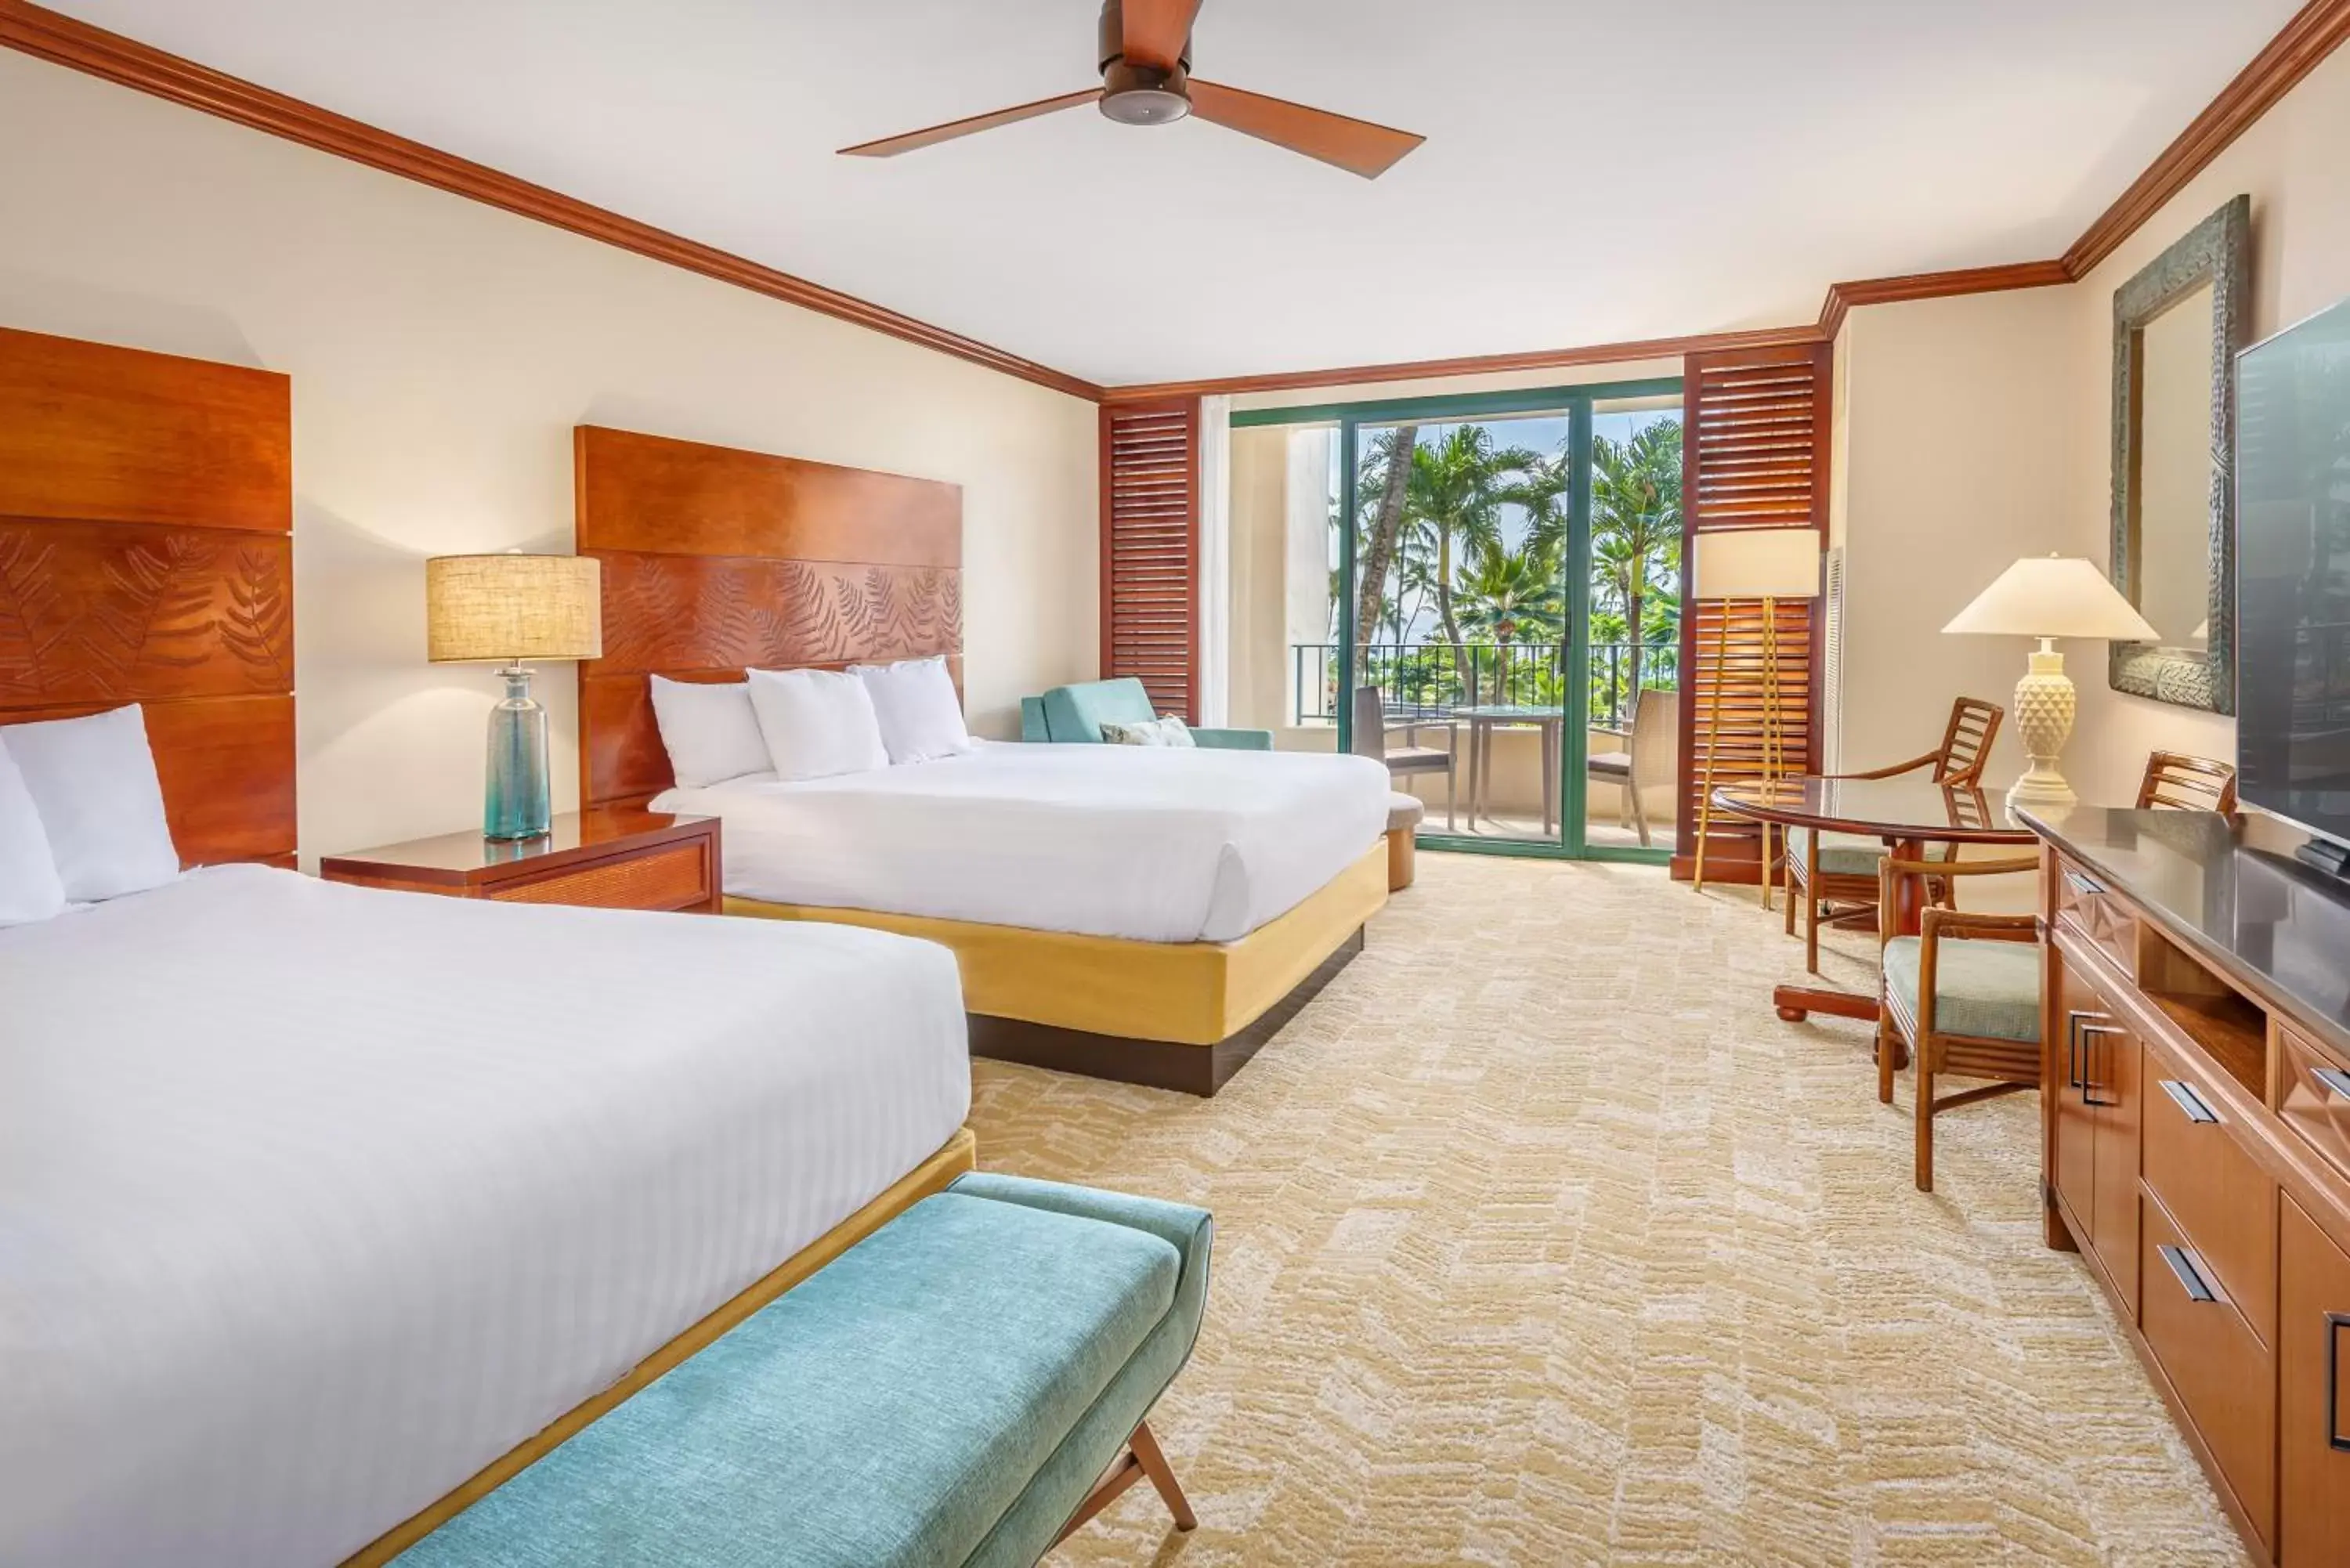 Bedroom in Grand Hyatt Kauai Resort & Spa